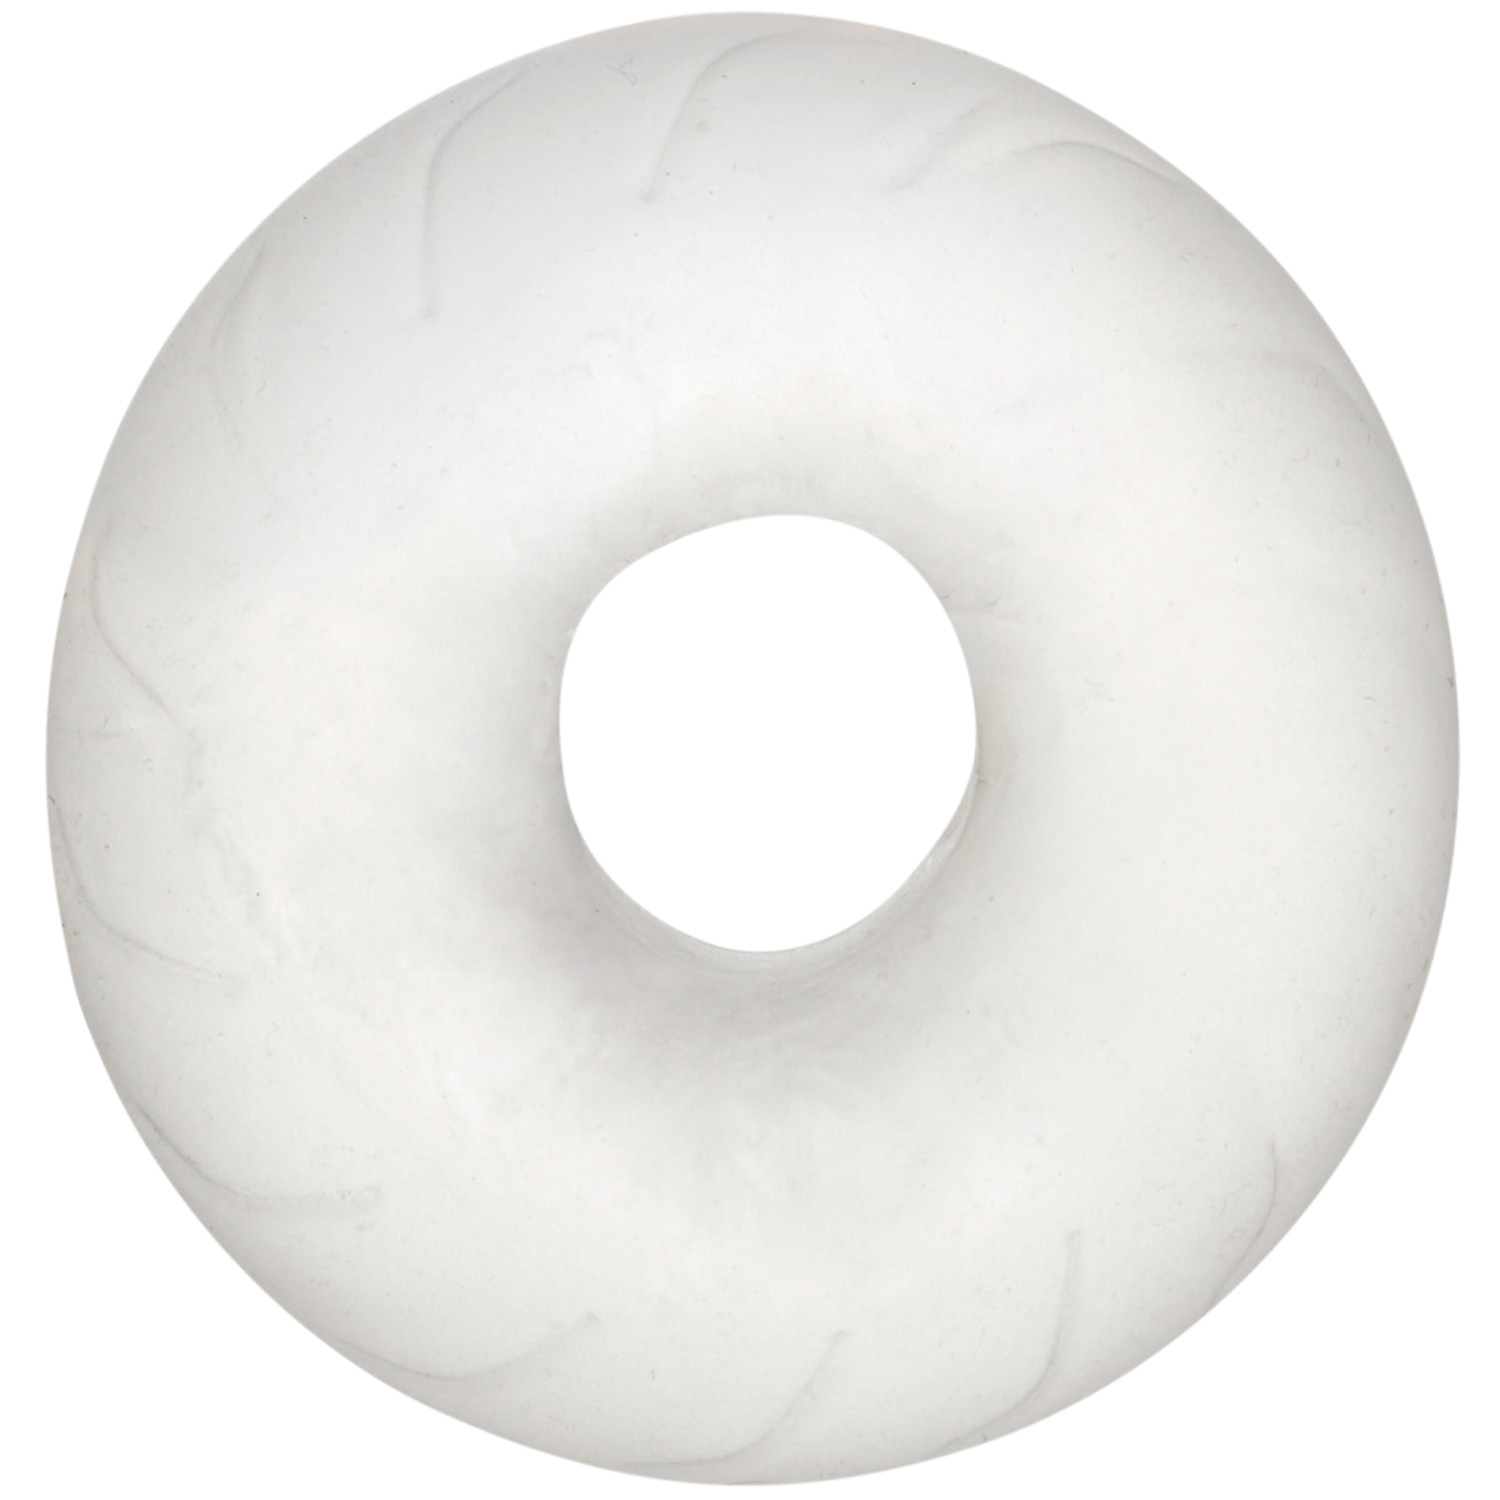 Sinful Donut Super Stretchy Penisring   - Klar